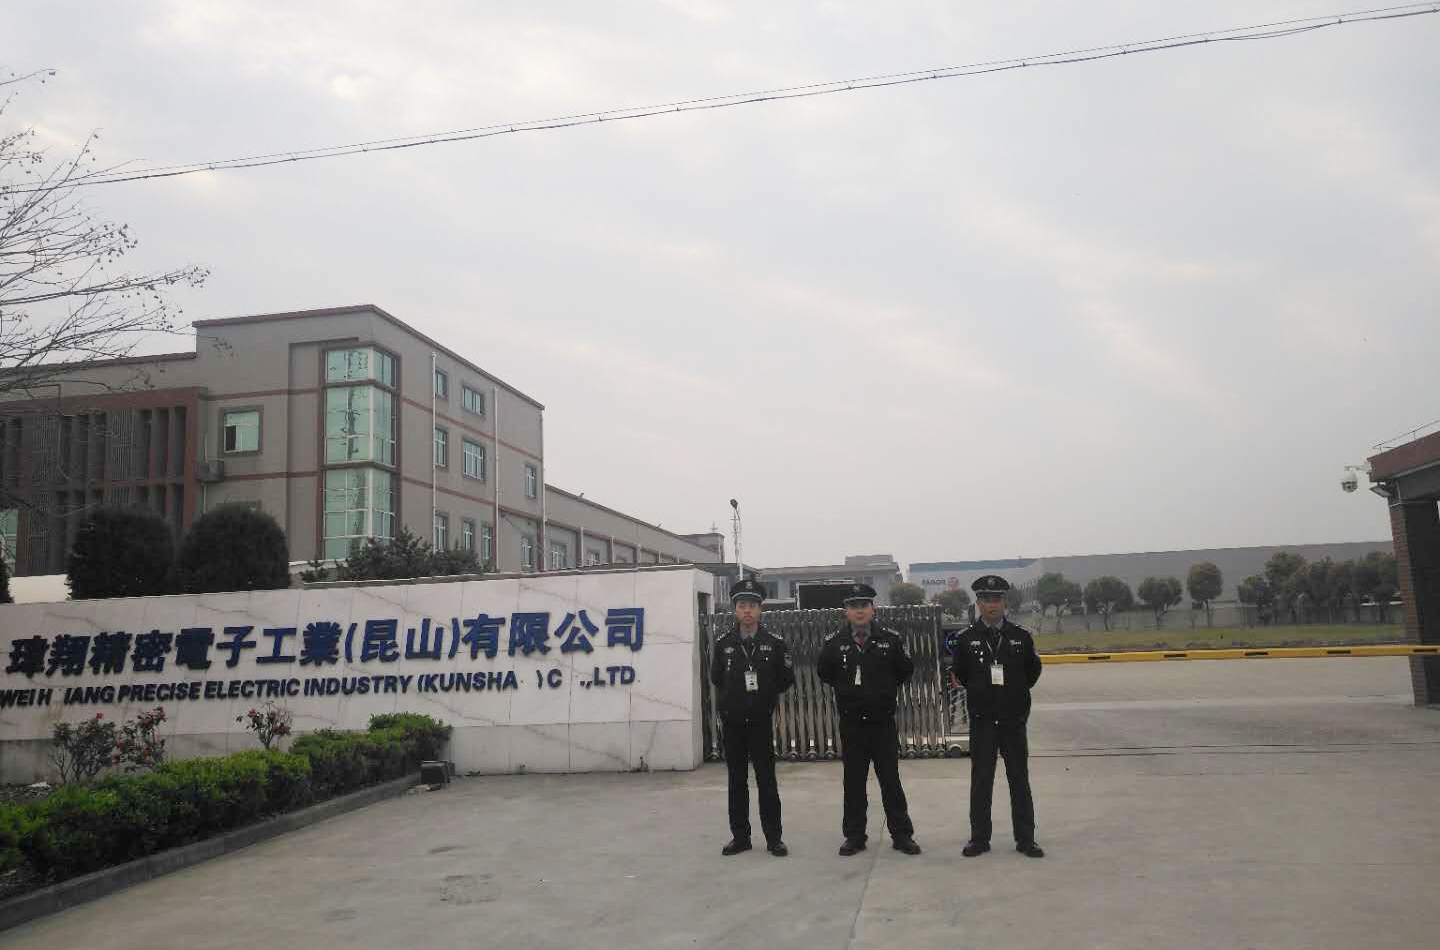 Haoxiang Precision Electronics Industry (Kunshan) Co., Ltd.